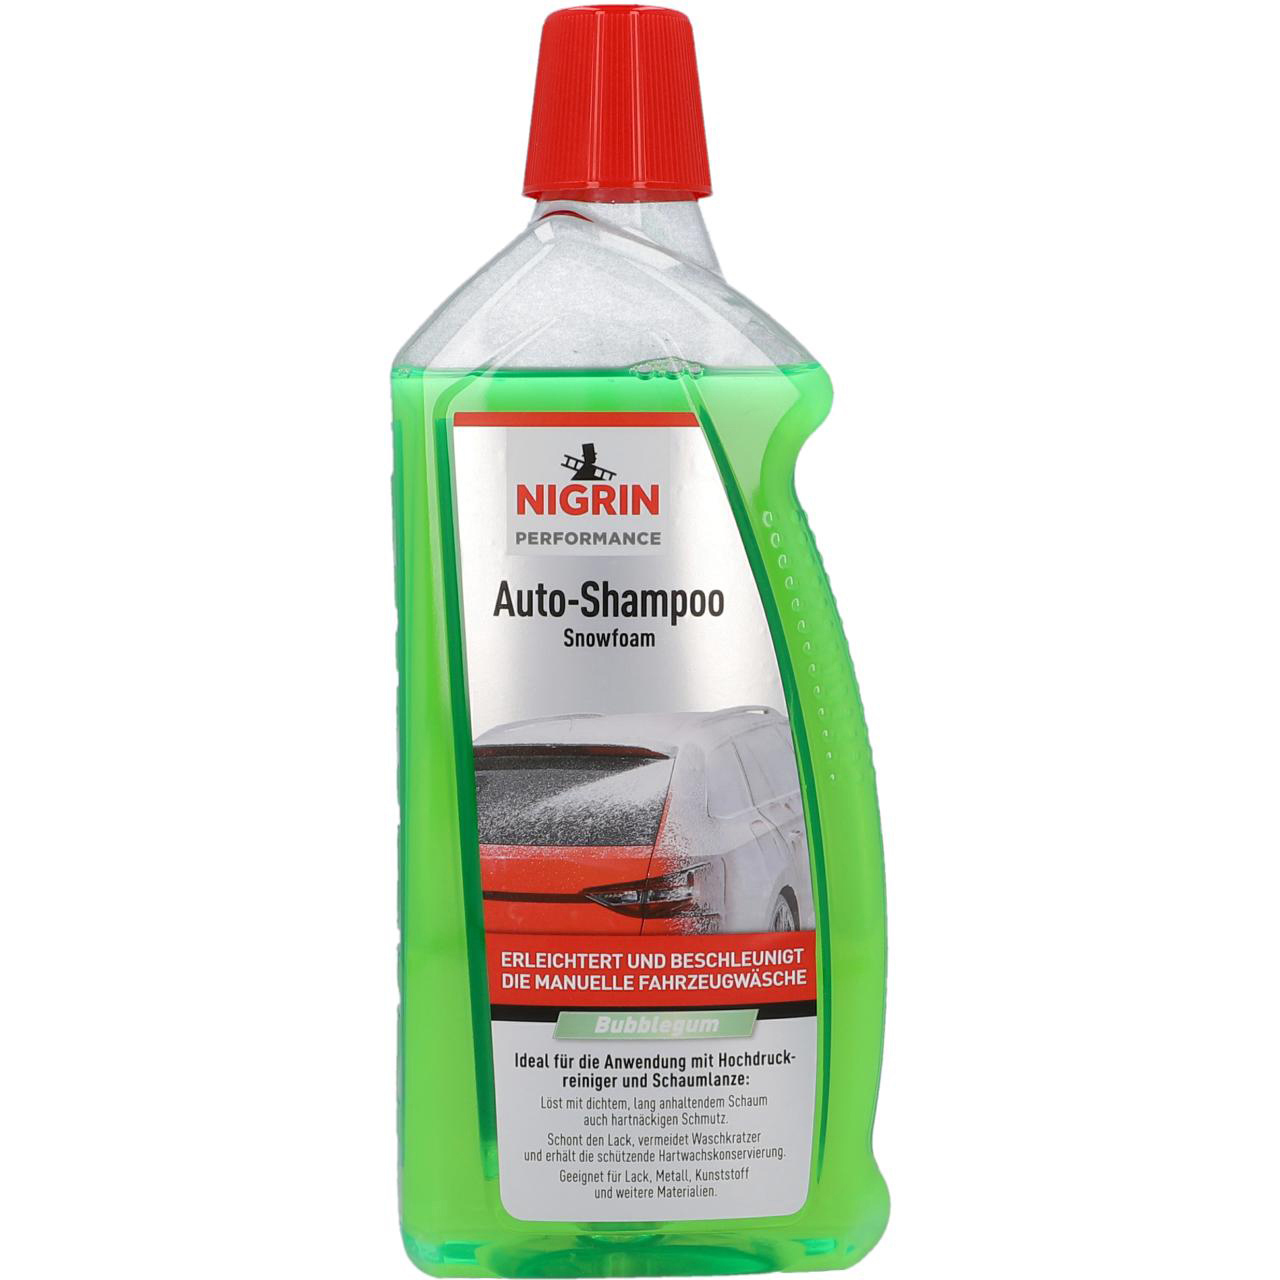 Grün 20605 NIGRIN Auto-Shampoo, Performance Snowfoam